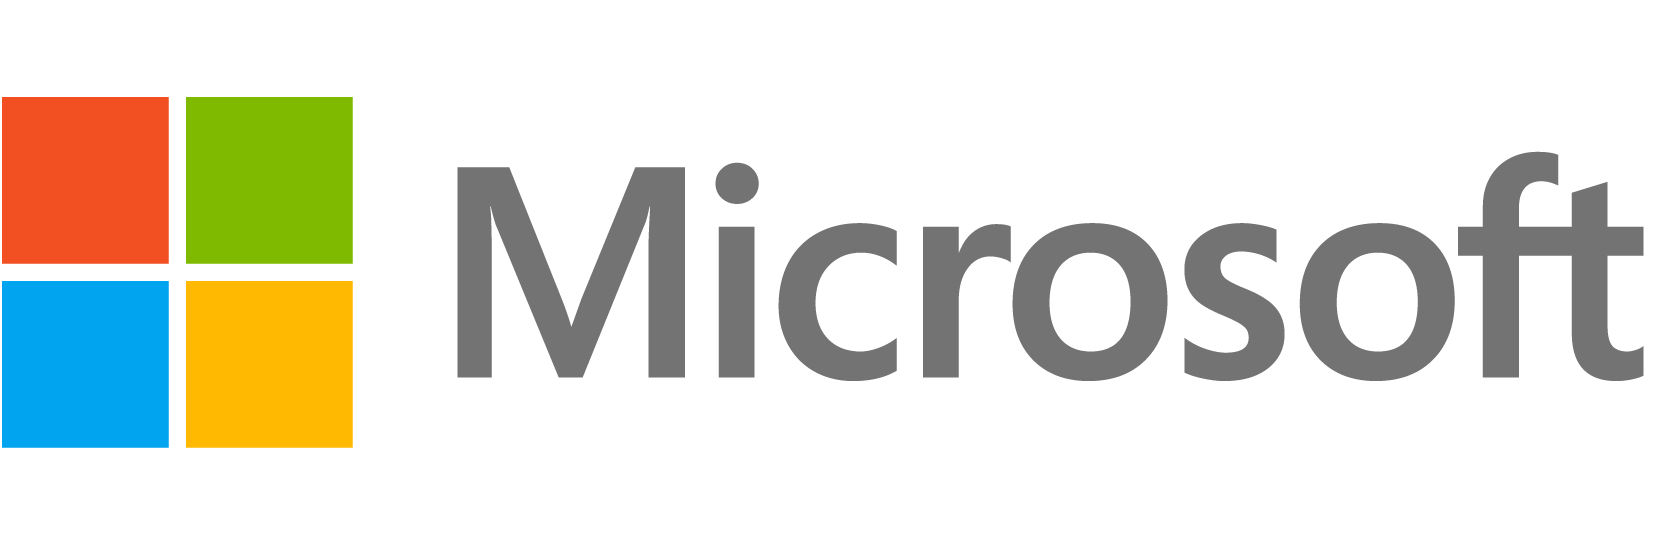 microsoft-logo-png-2407